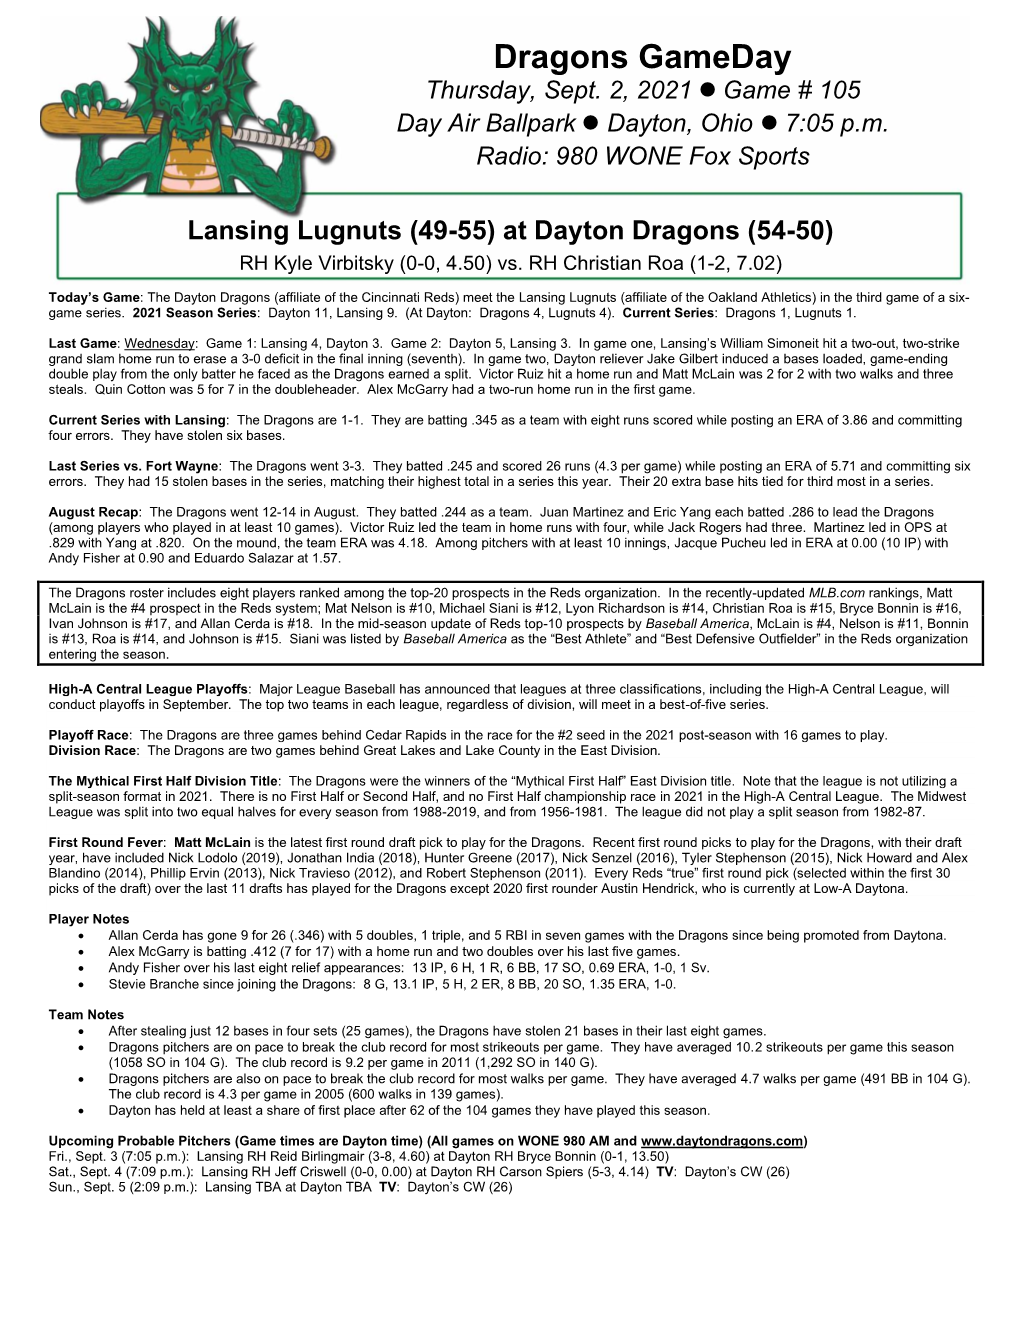 Lansing Lugnuts (49-55) at Dayton Dragons (54-50) RH Kyle Virbitsky (0-0, 4.50) Vs